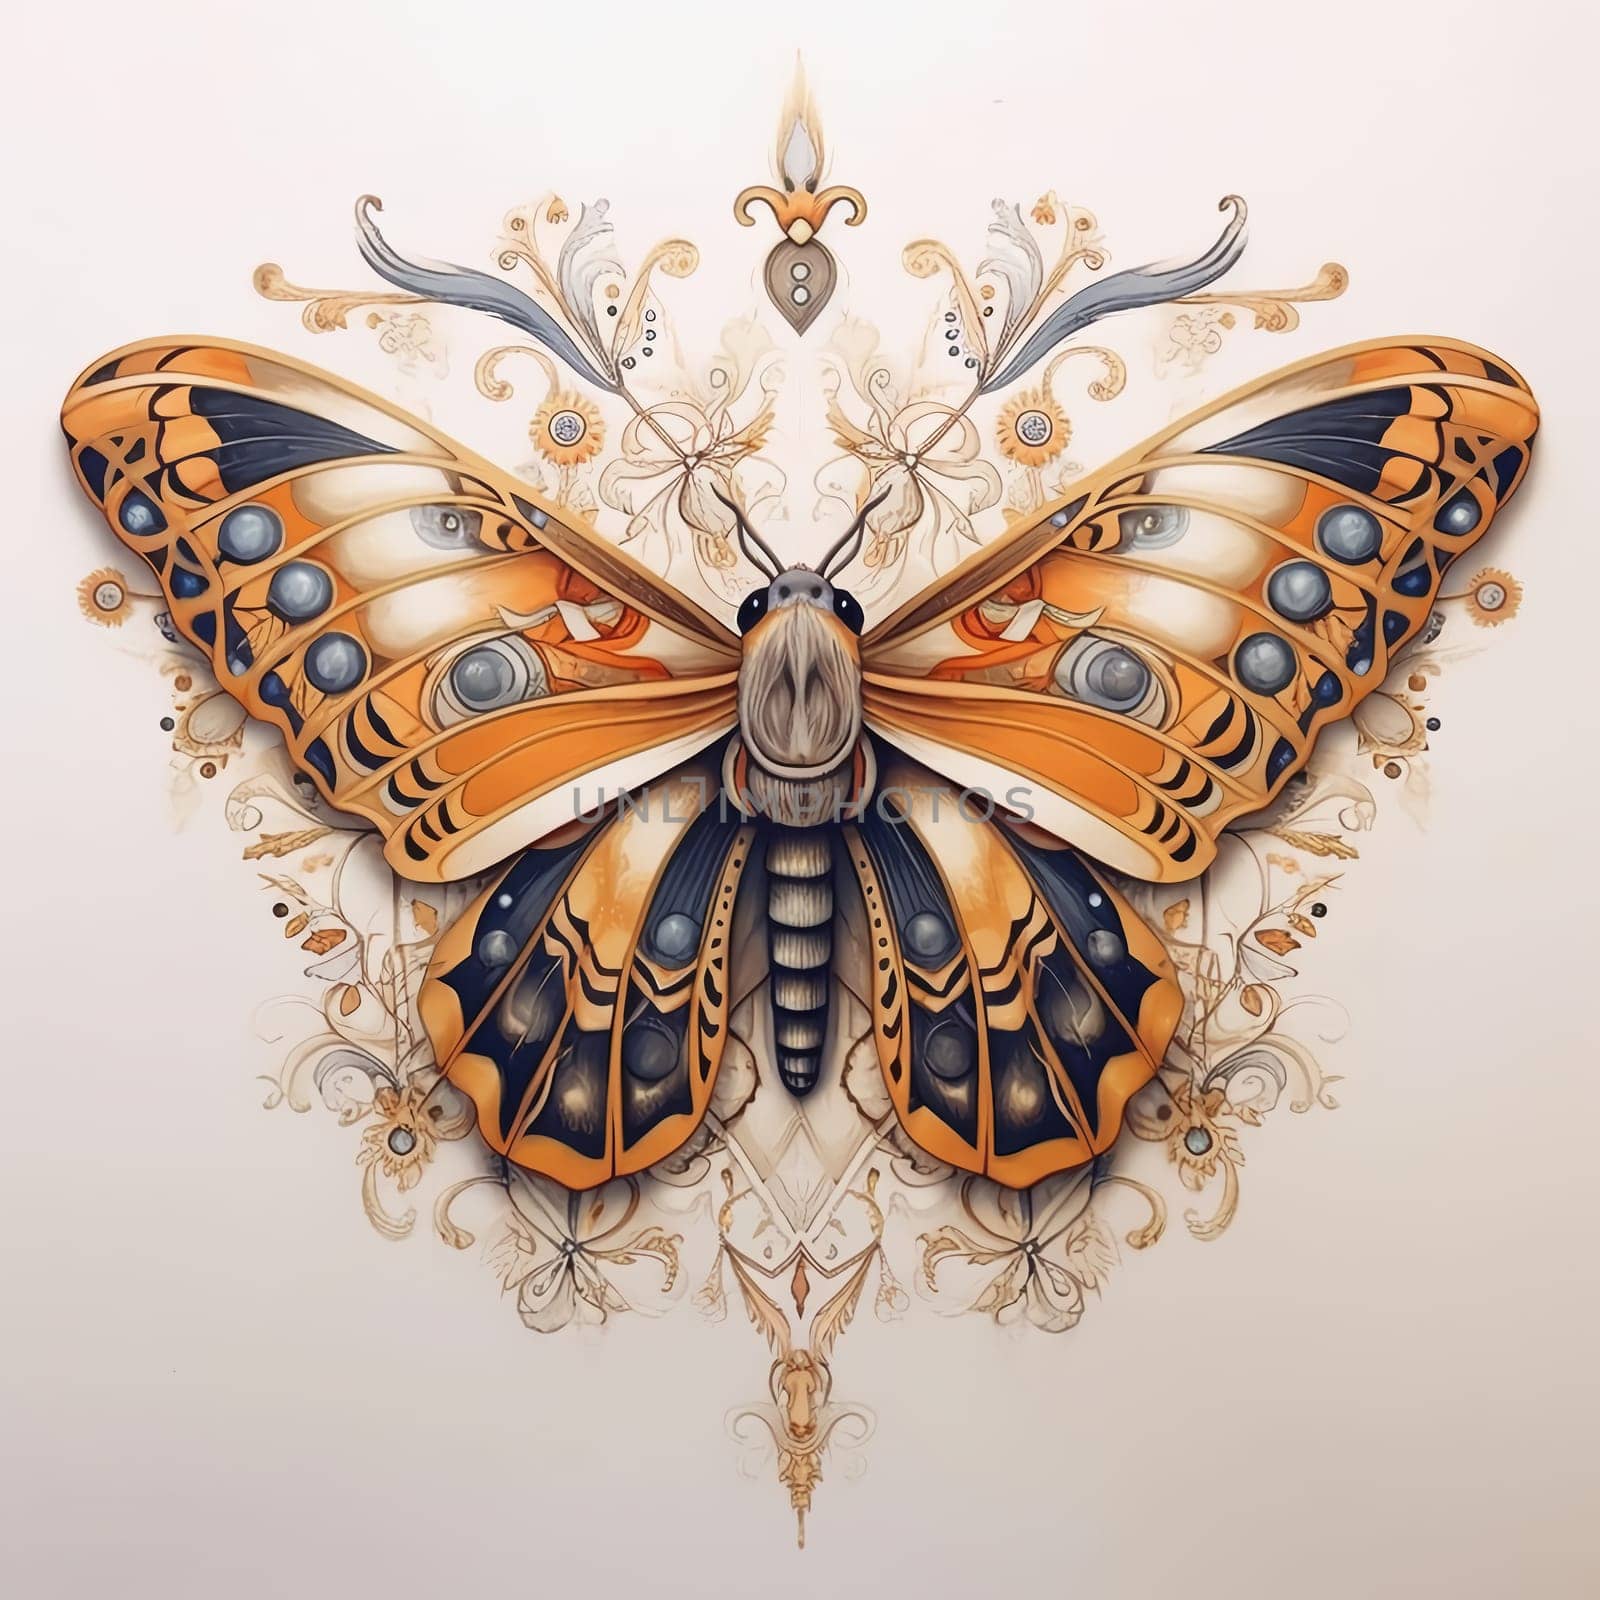 Retro Butterfly Bundle. Butterfly clipart. by AndreyKENO